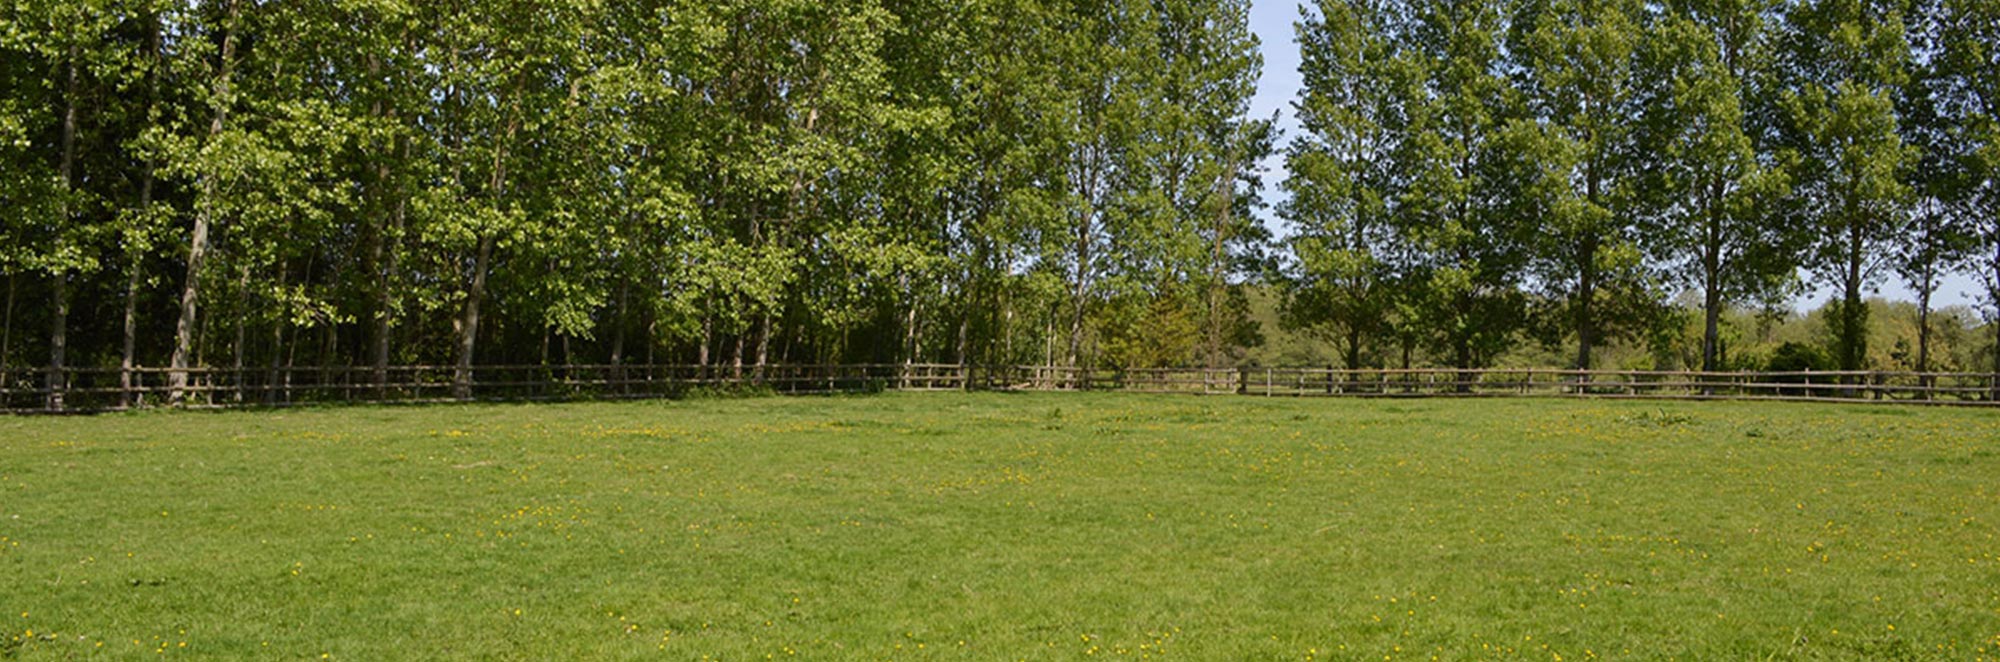 Izzy's Meadow, near Guildford 